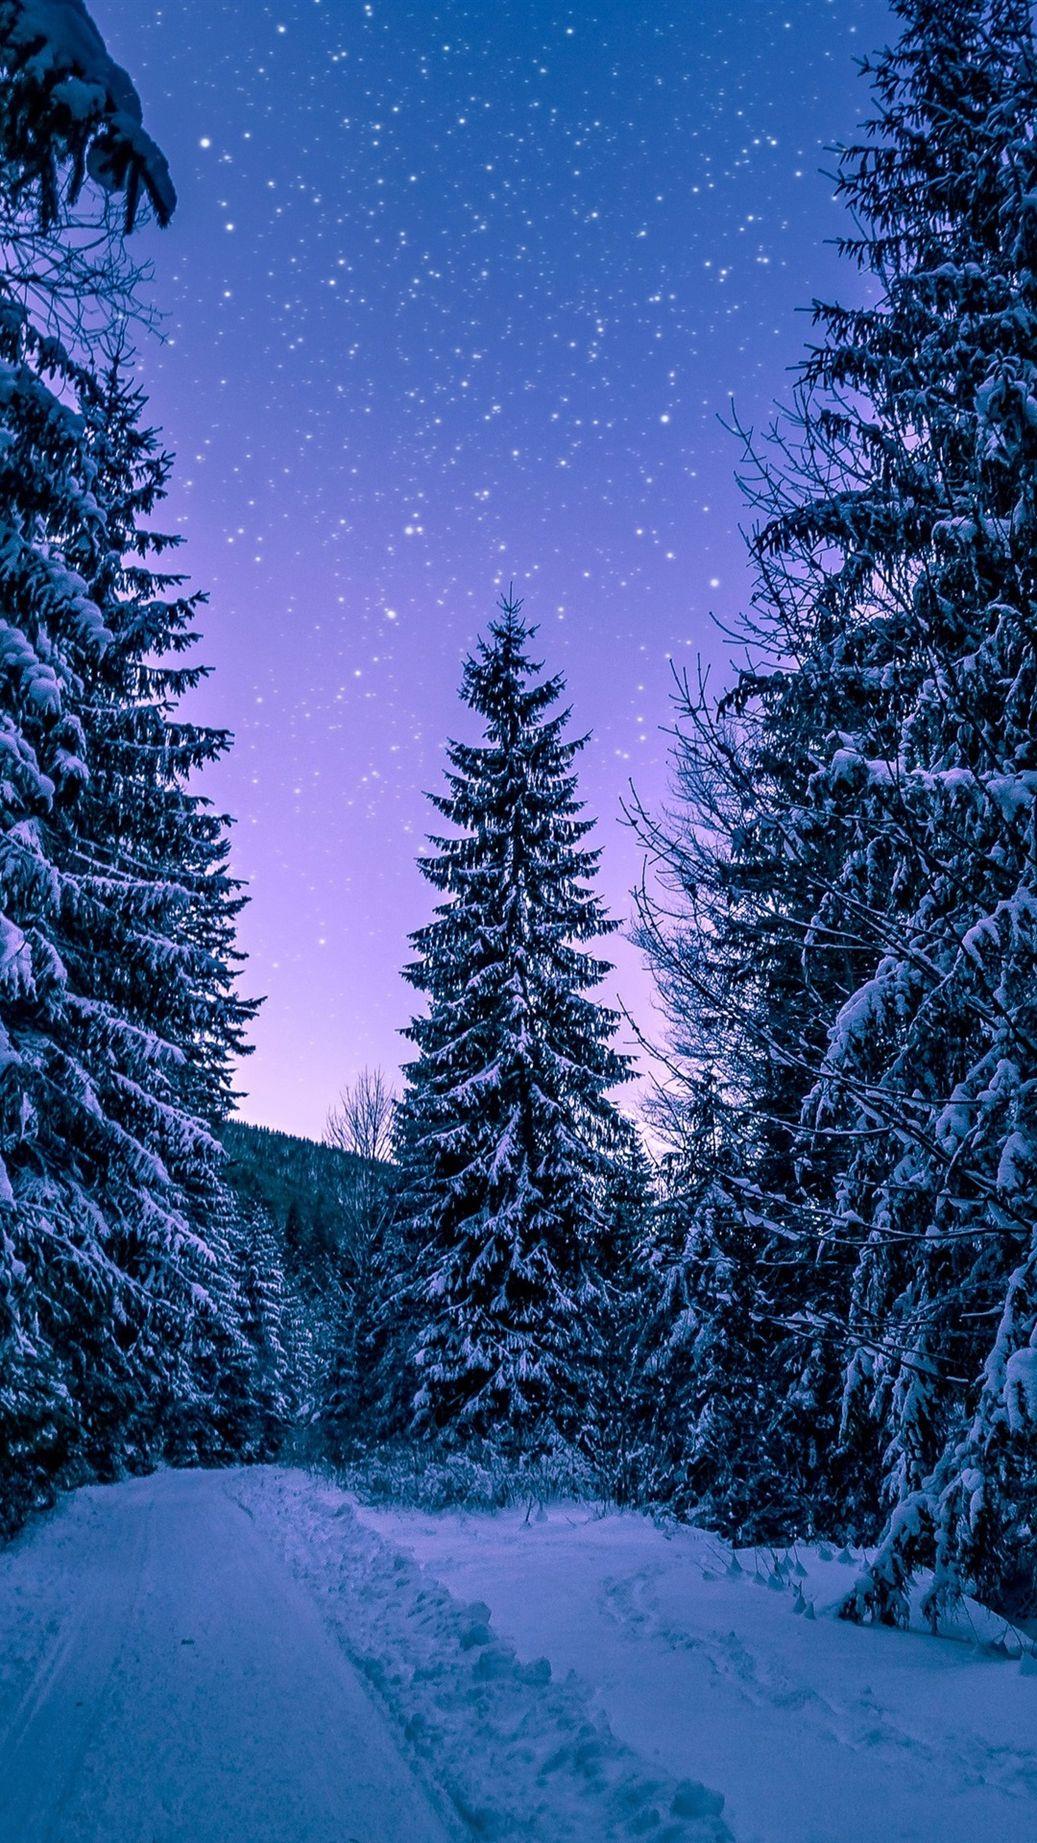 Картинки на экран телефона зима - 67 фото